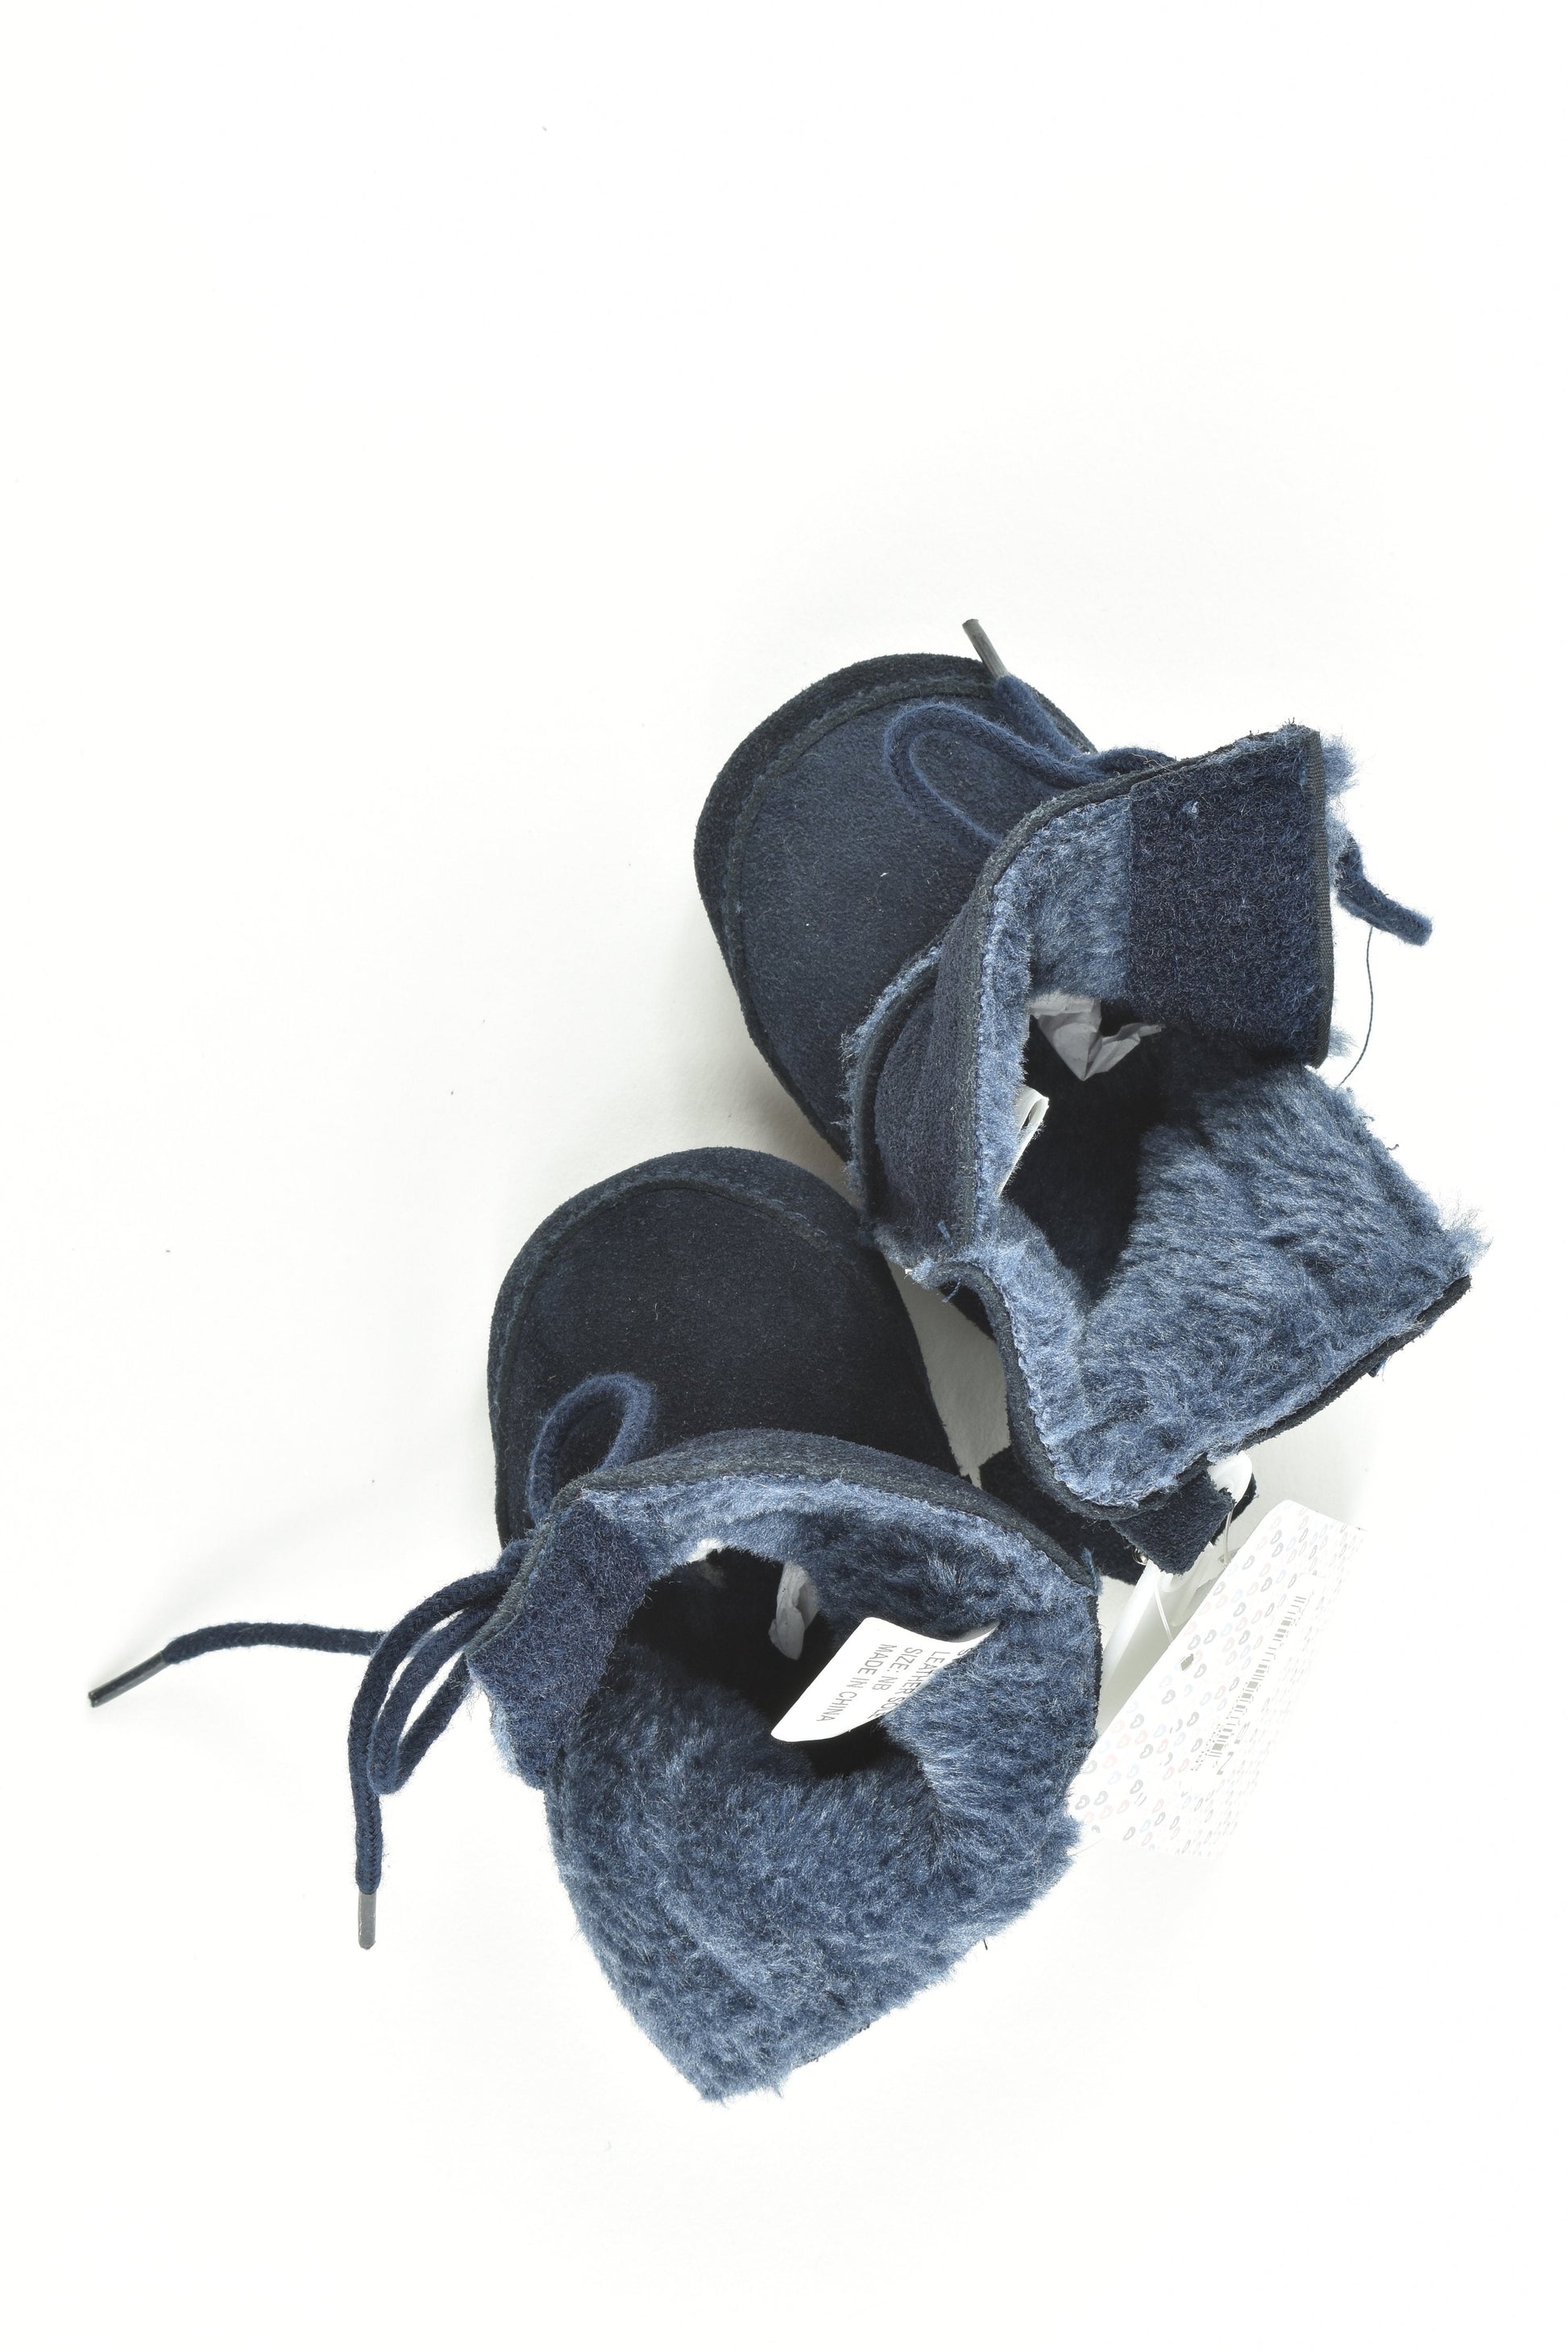 NEW Kaboosh (AU) Size Newborn Leather Suede Boot